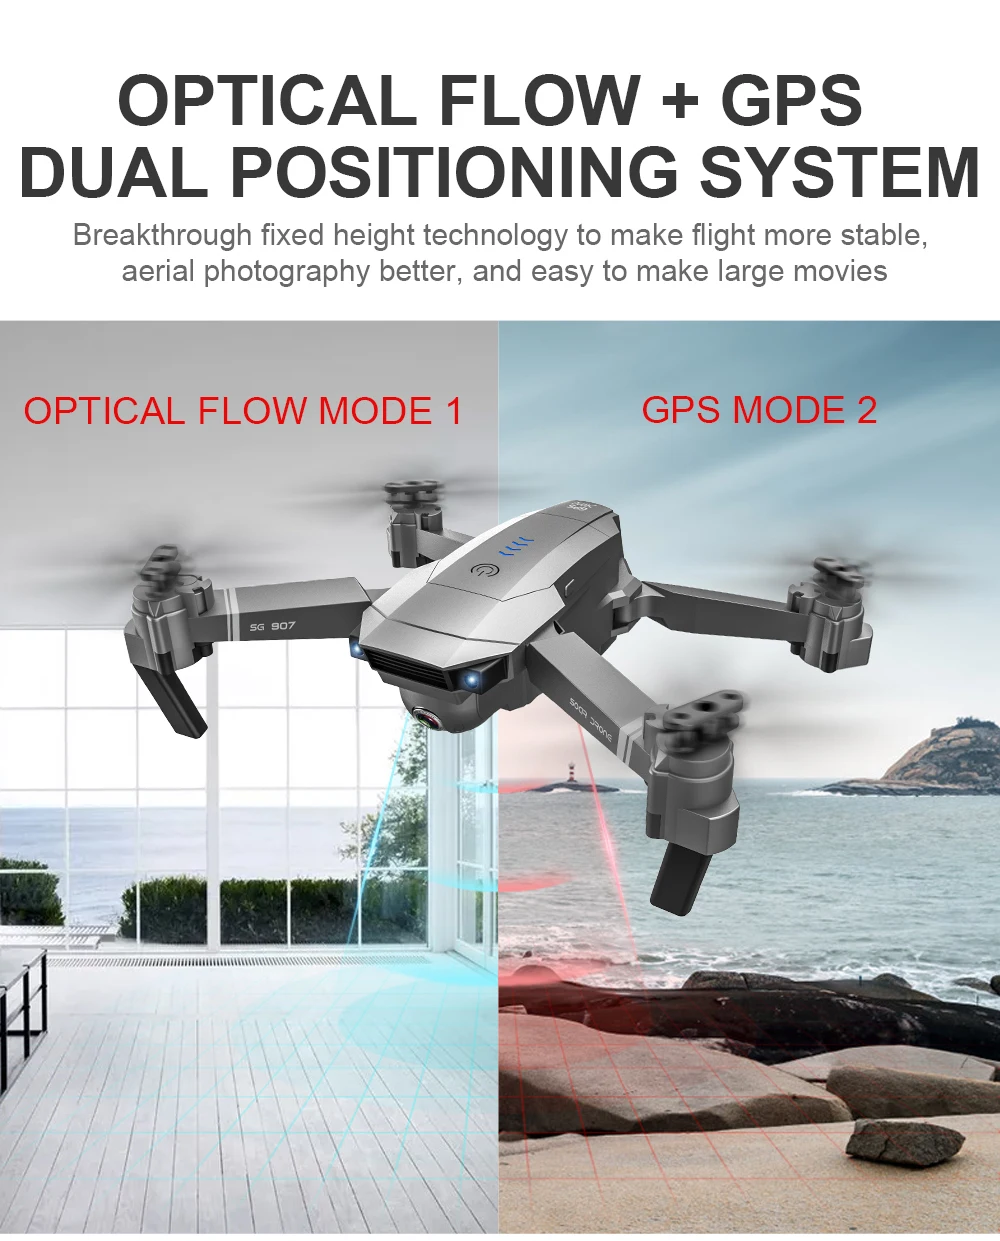  SG907 Drone 4k Camera X50 ZOOM Wide Anti-shake 5G WIFI FPV Gesture photo GPS Professional Dron RC H